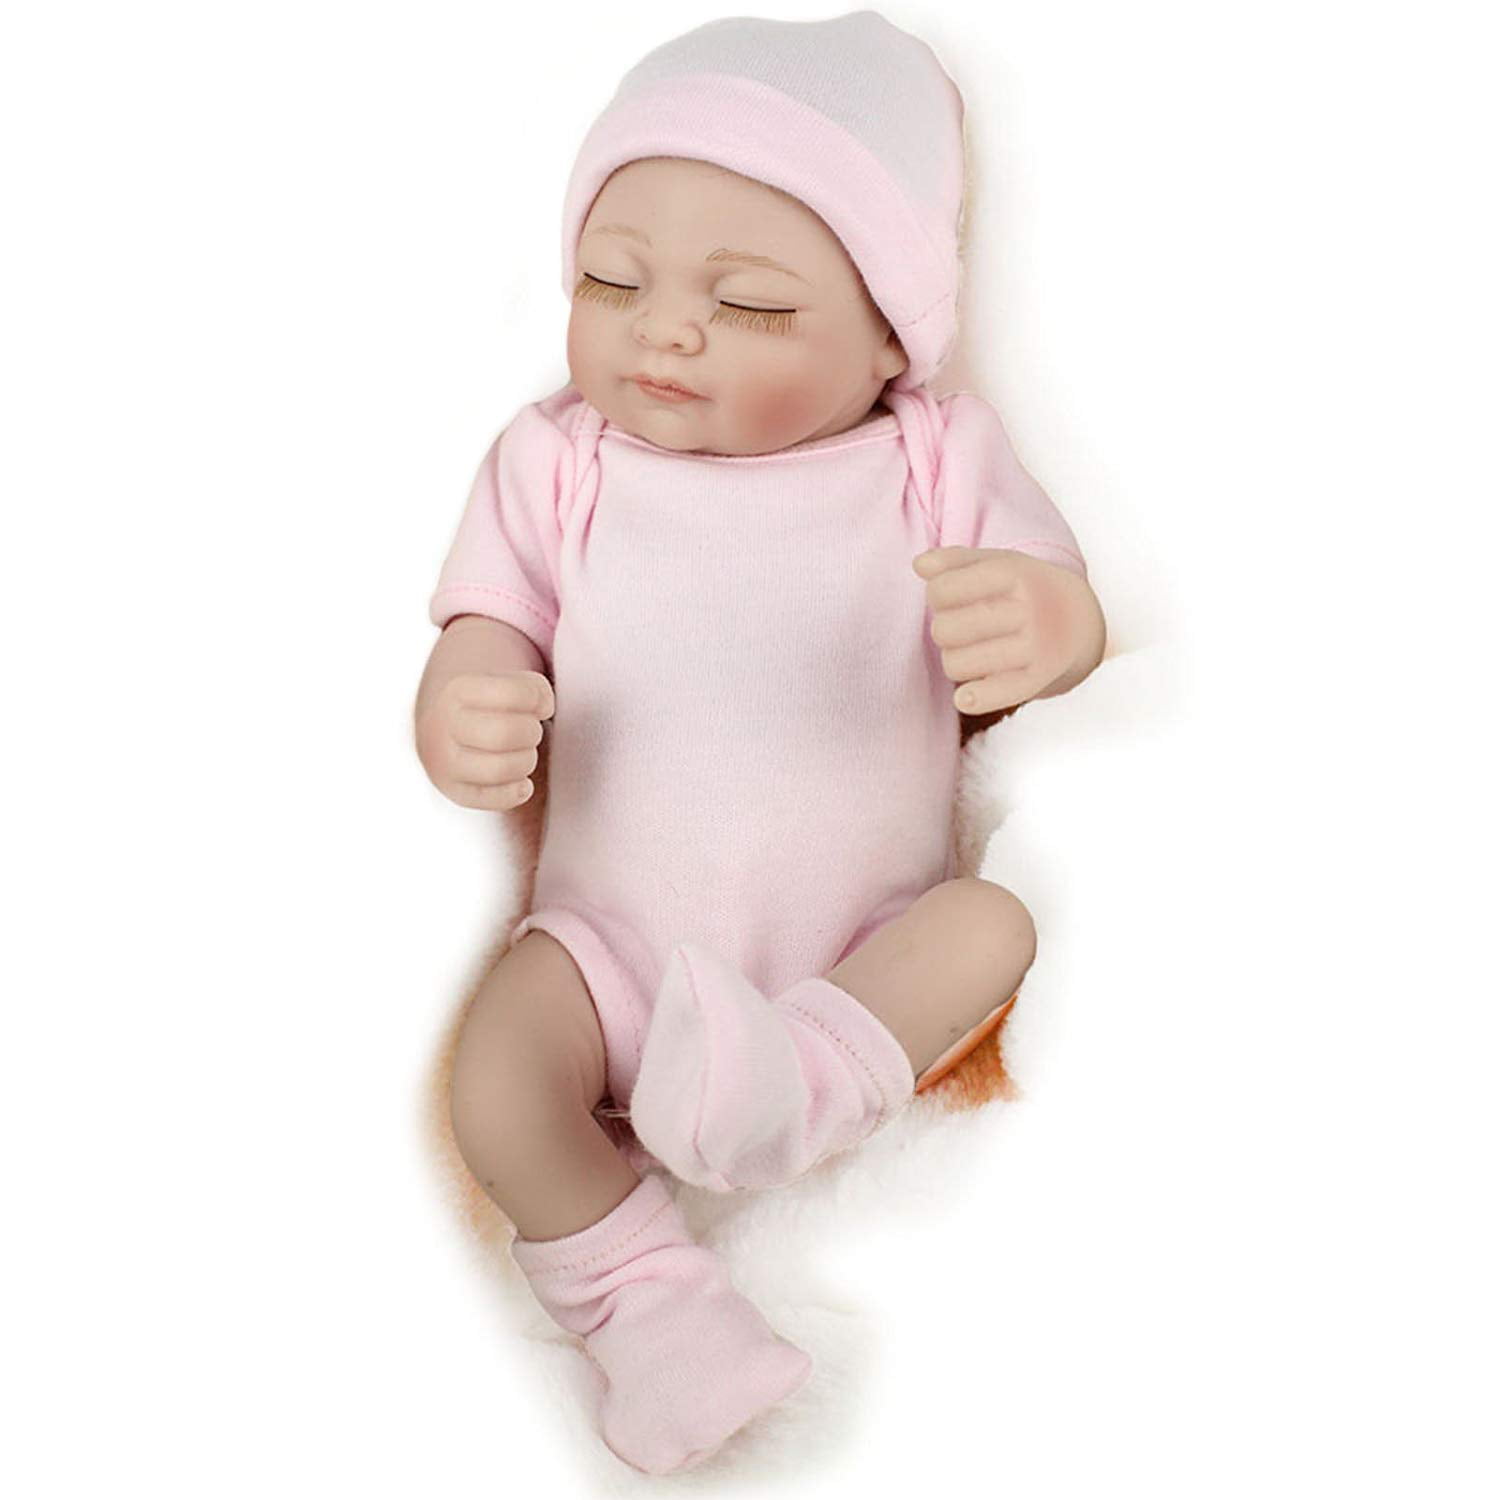 11"Handmade Reborn Newborn Mini Baby Doll Full Soft Silicone Vinyl Bath Girl Toy 